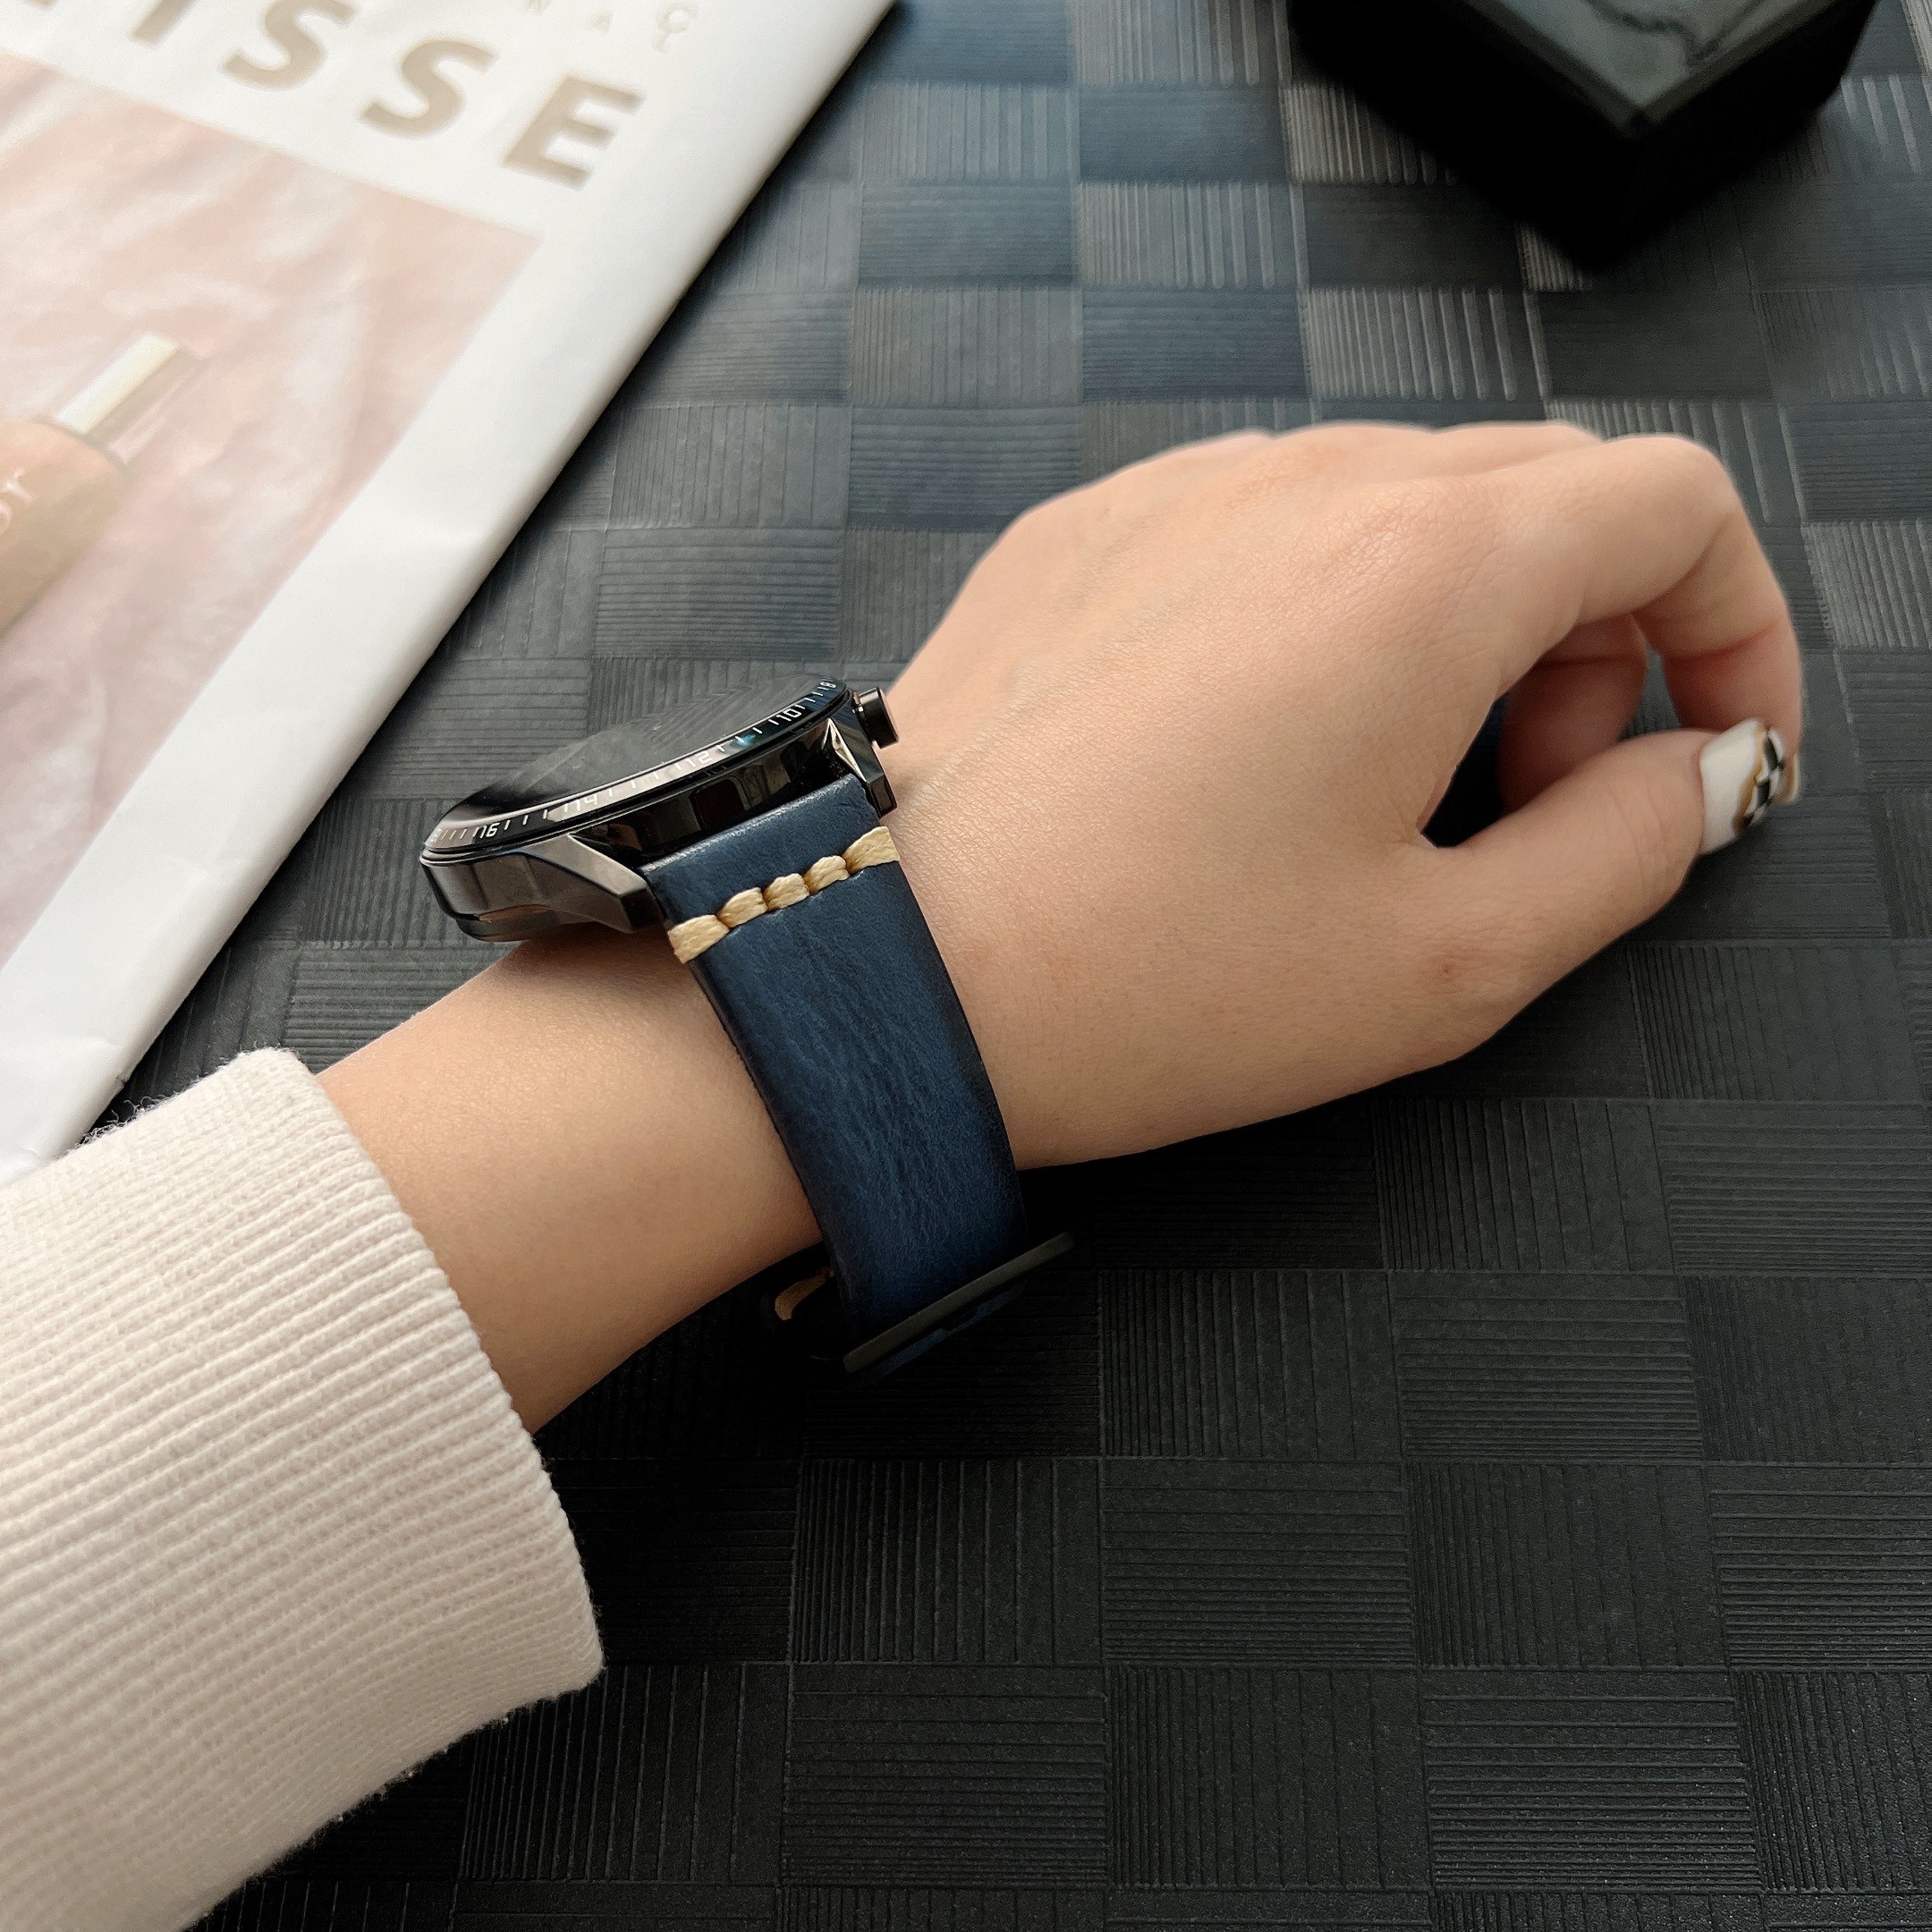 20 22mm Leather Bracelet Strap For Samsung Galaxy Watch Active2 40 44mm Watchband For Samsung Galaxy Watch 46mm Gear S3 Bracelet